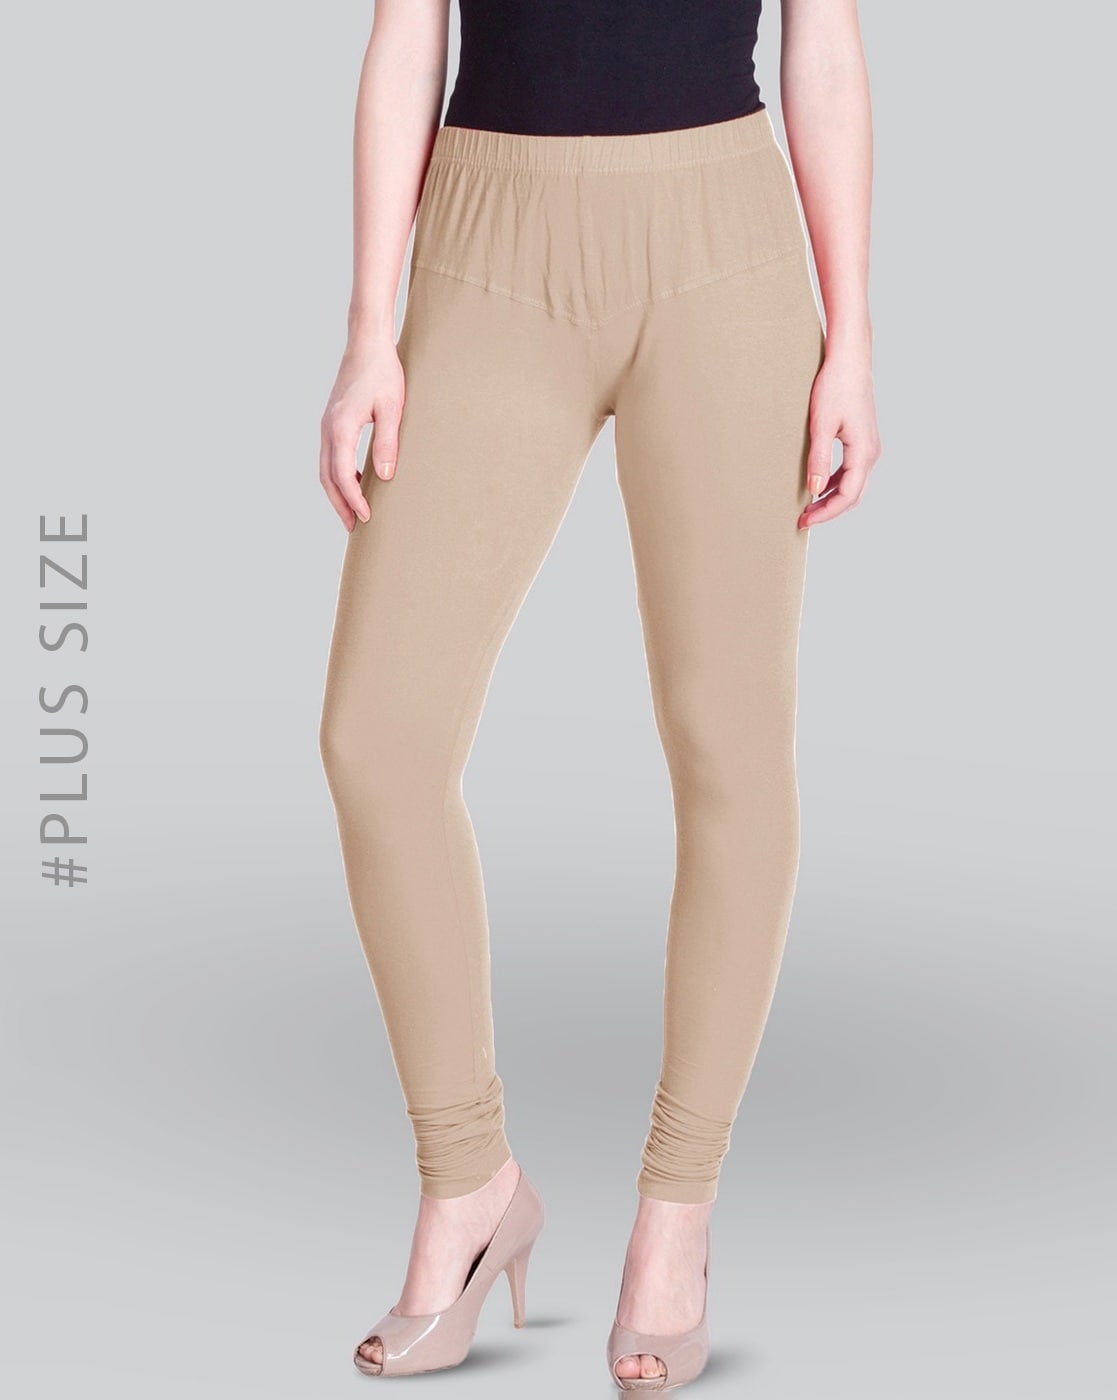 Buy Plussize Golden Leggings for Women's & Girls Size(L,XL,2XL,3XL,4XL) at  Amazon.in